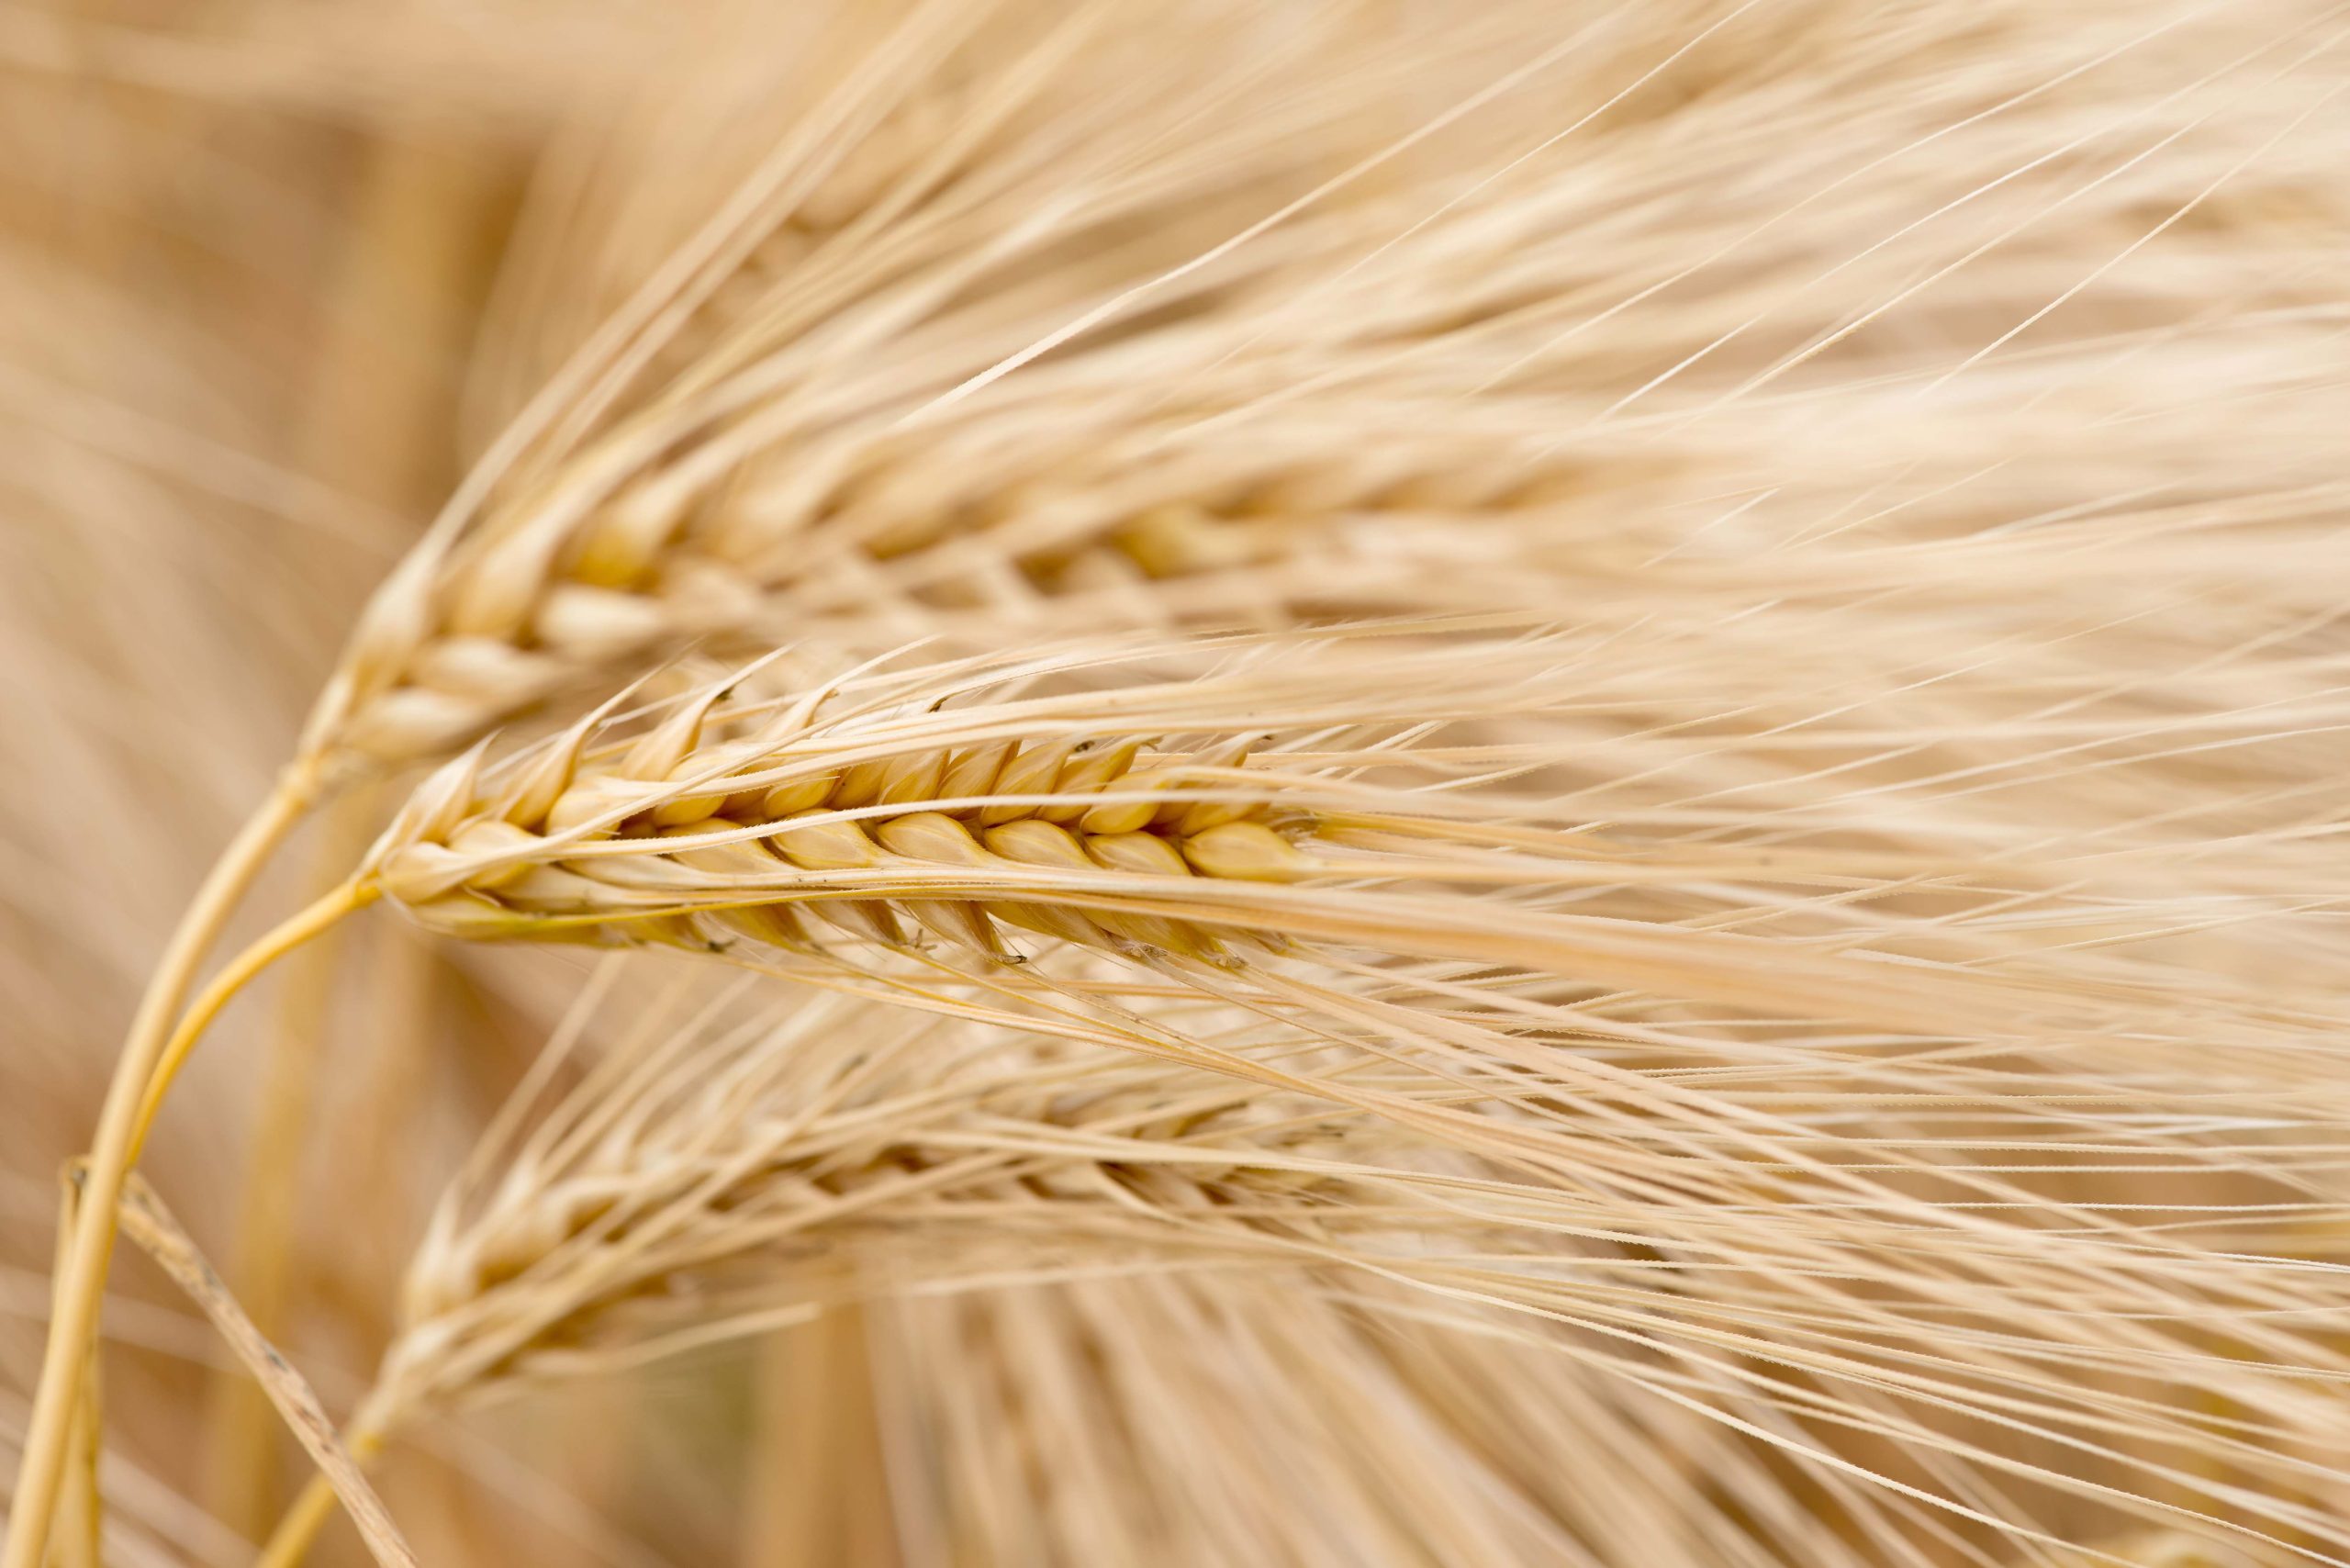 Mature barley